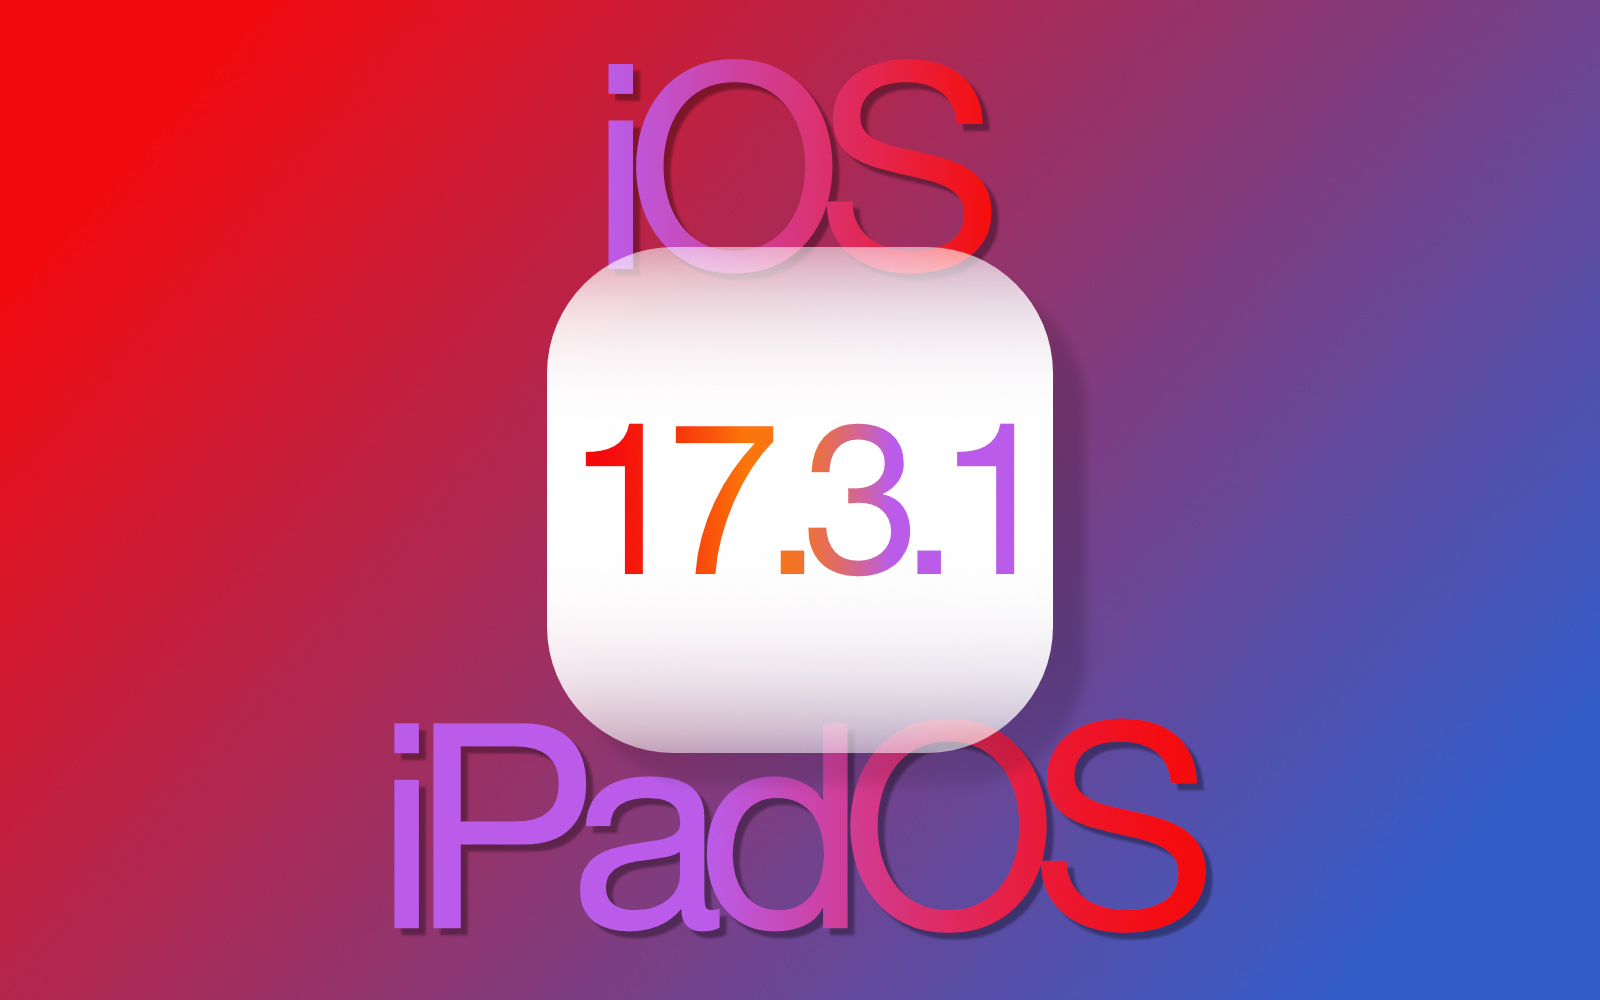 Ios ipados 17 3 1 update release